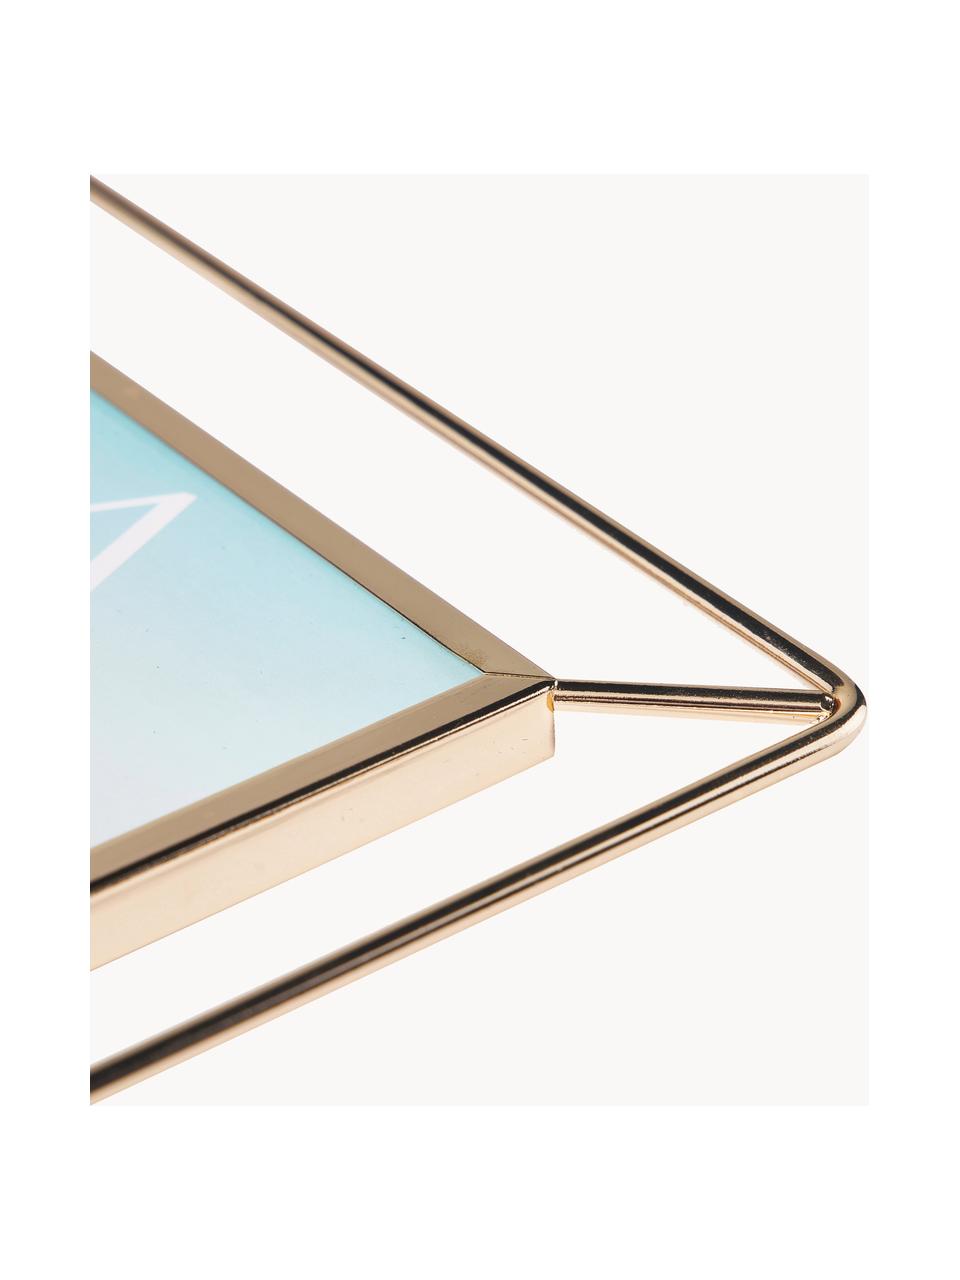 Bilderrahmen Atura, Rahmen: Metall, beschichtet, Front: Glas, Goldfarben, 10 x 15 cm